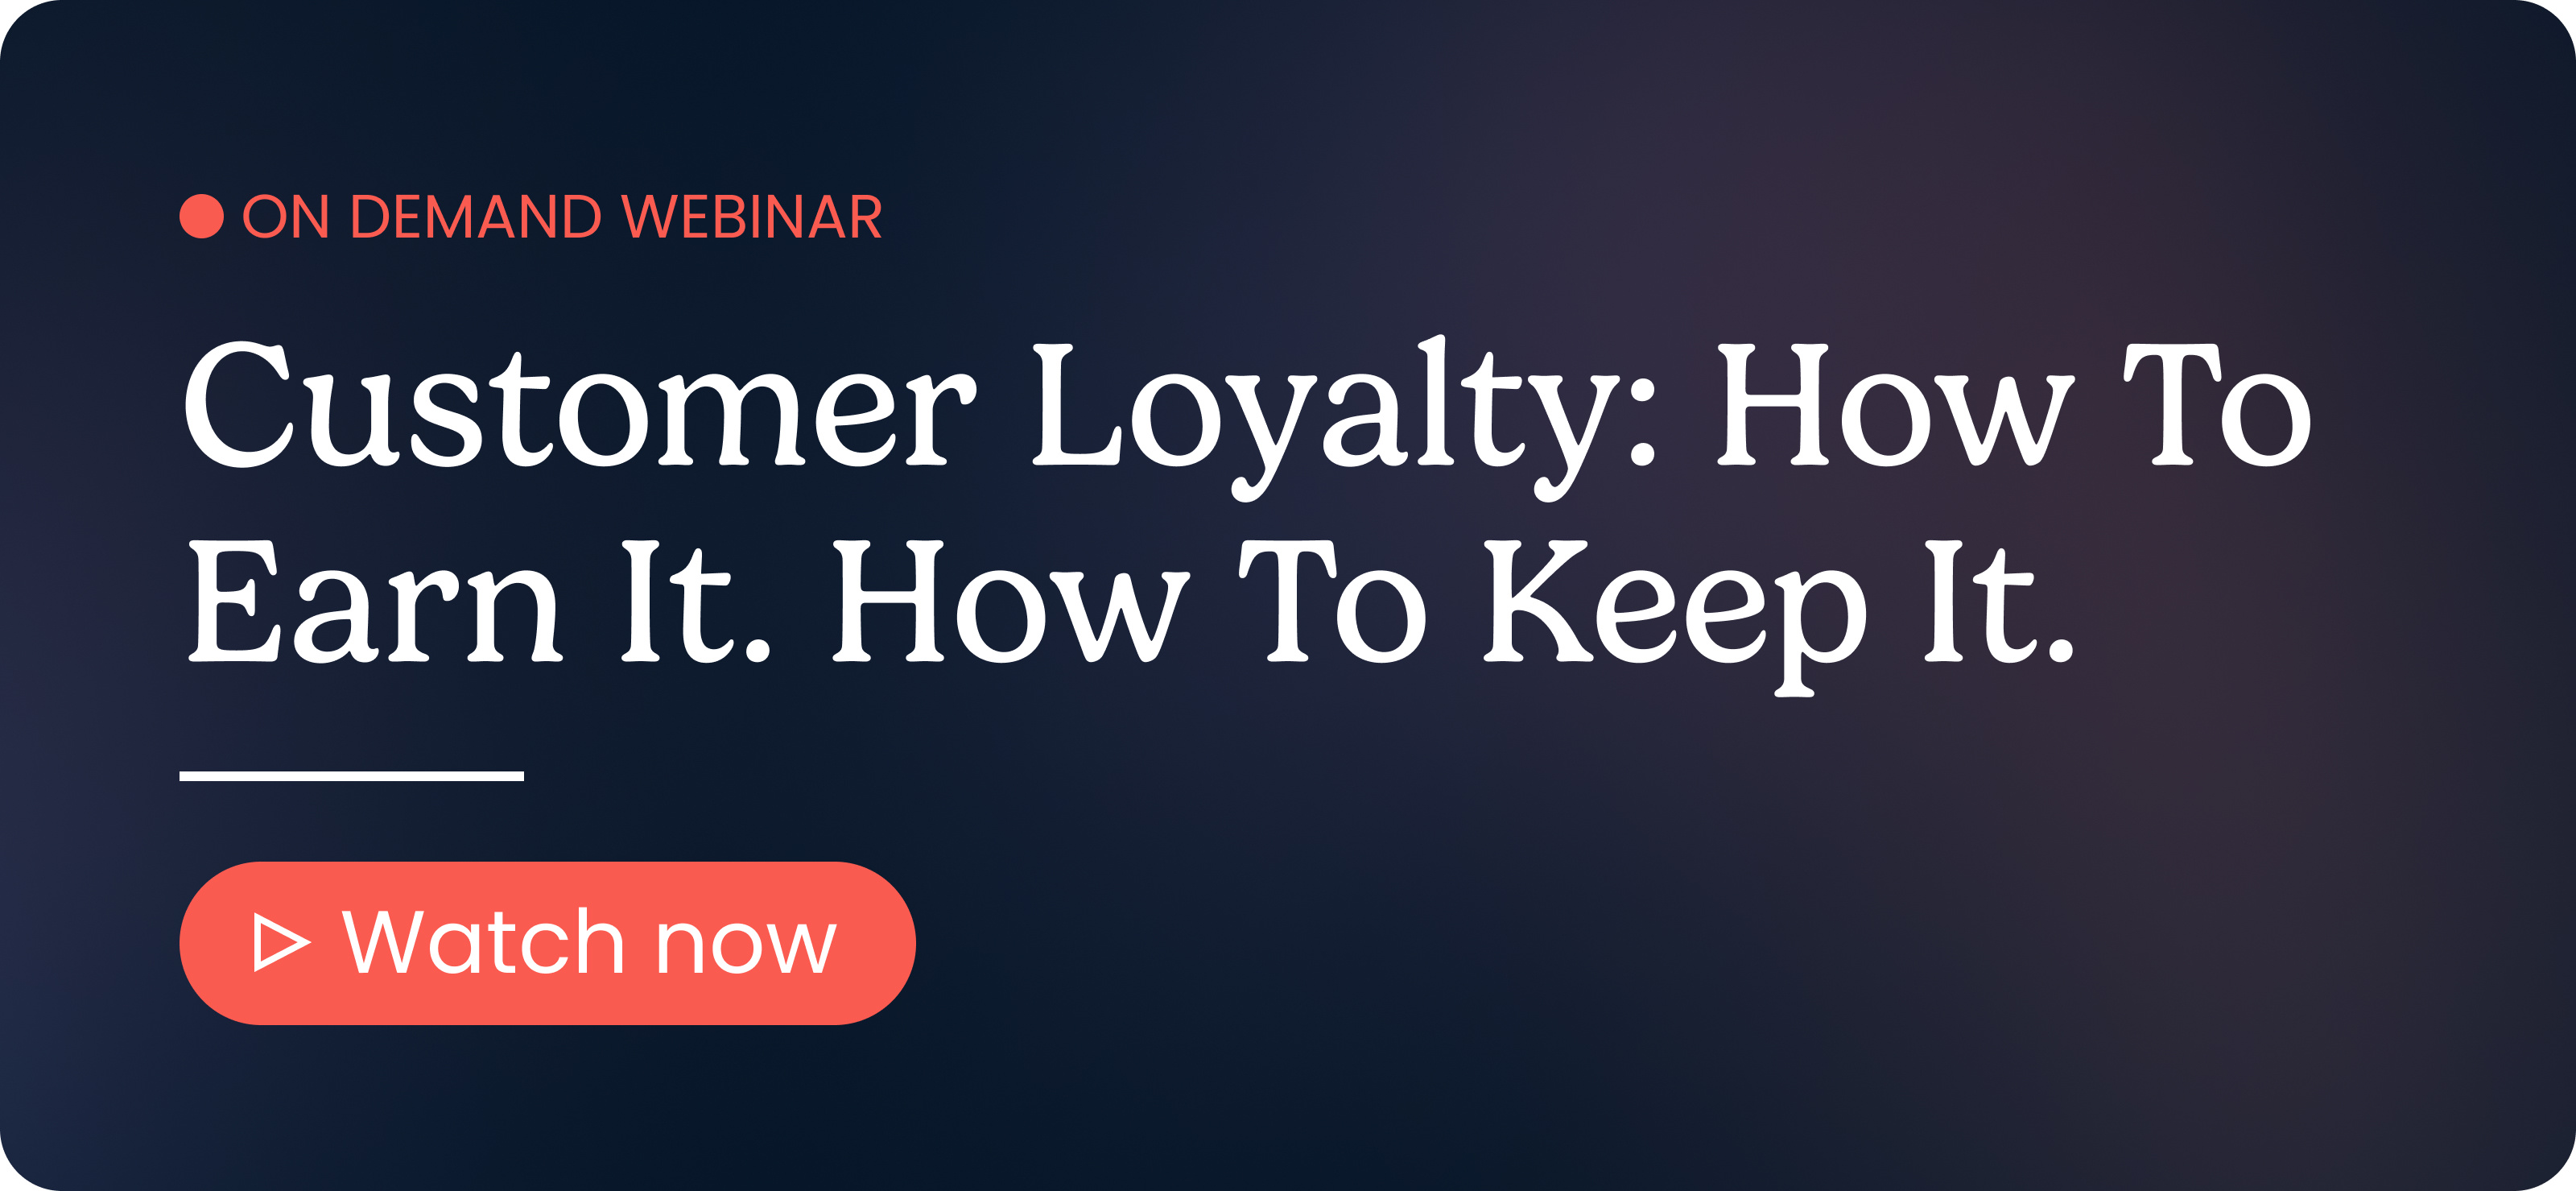 Customer loyalty webinar - how to earn loyalty